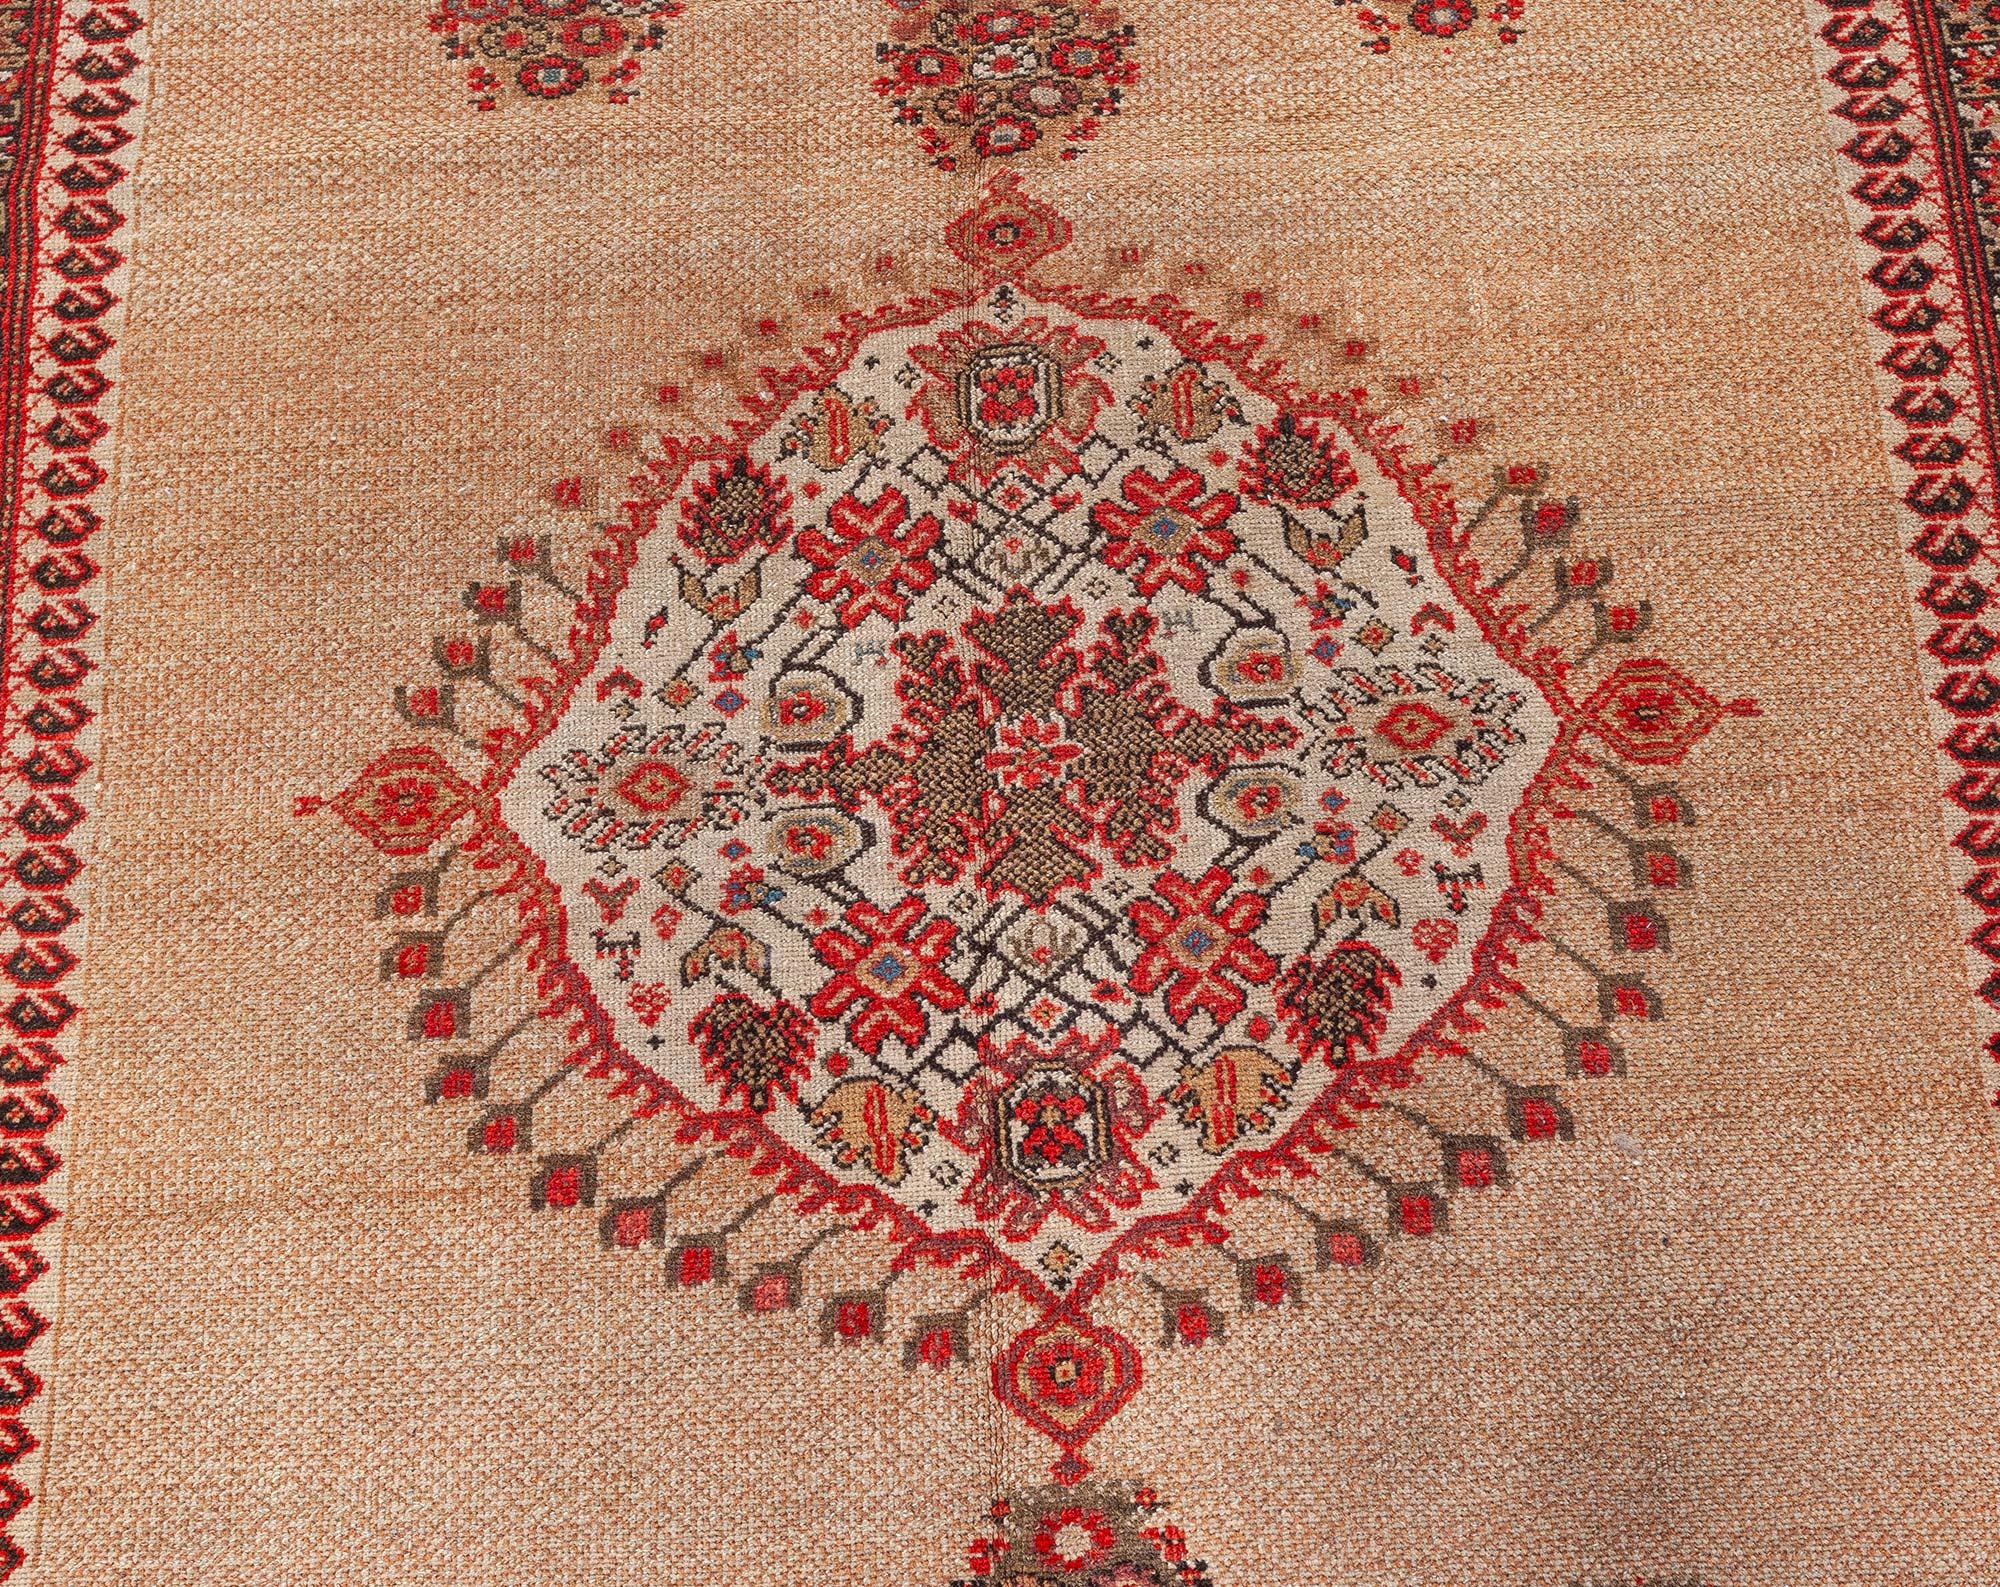 Authentic 19th century Sarouk handmade wool rug
Size: 4'0